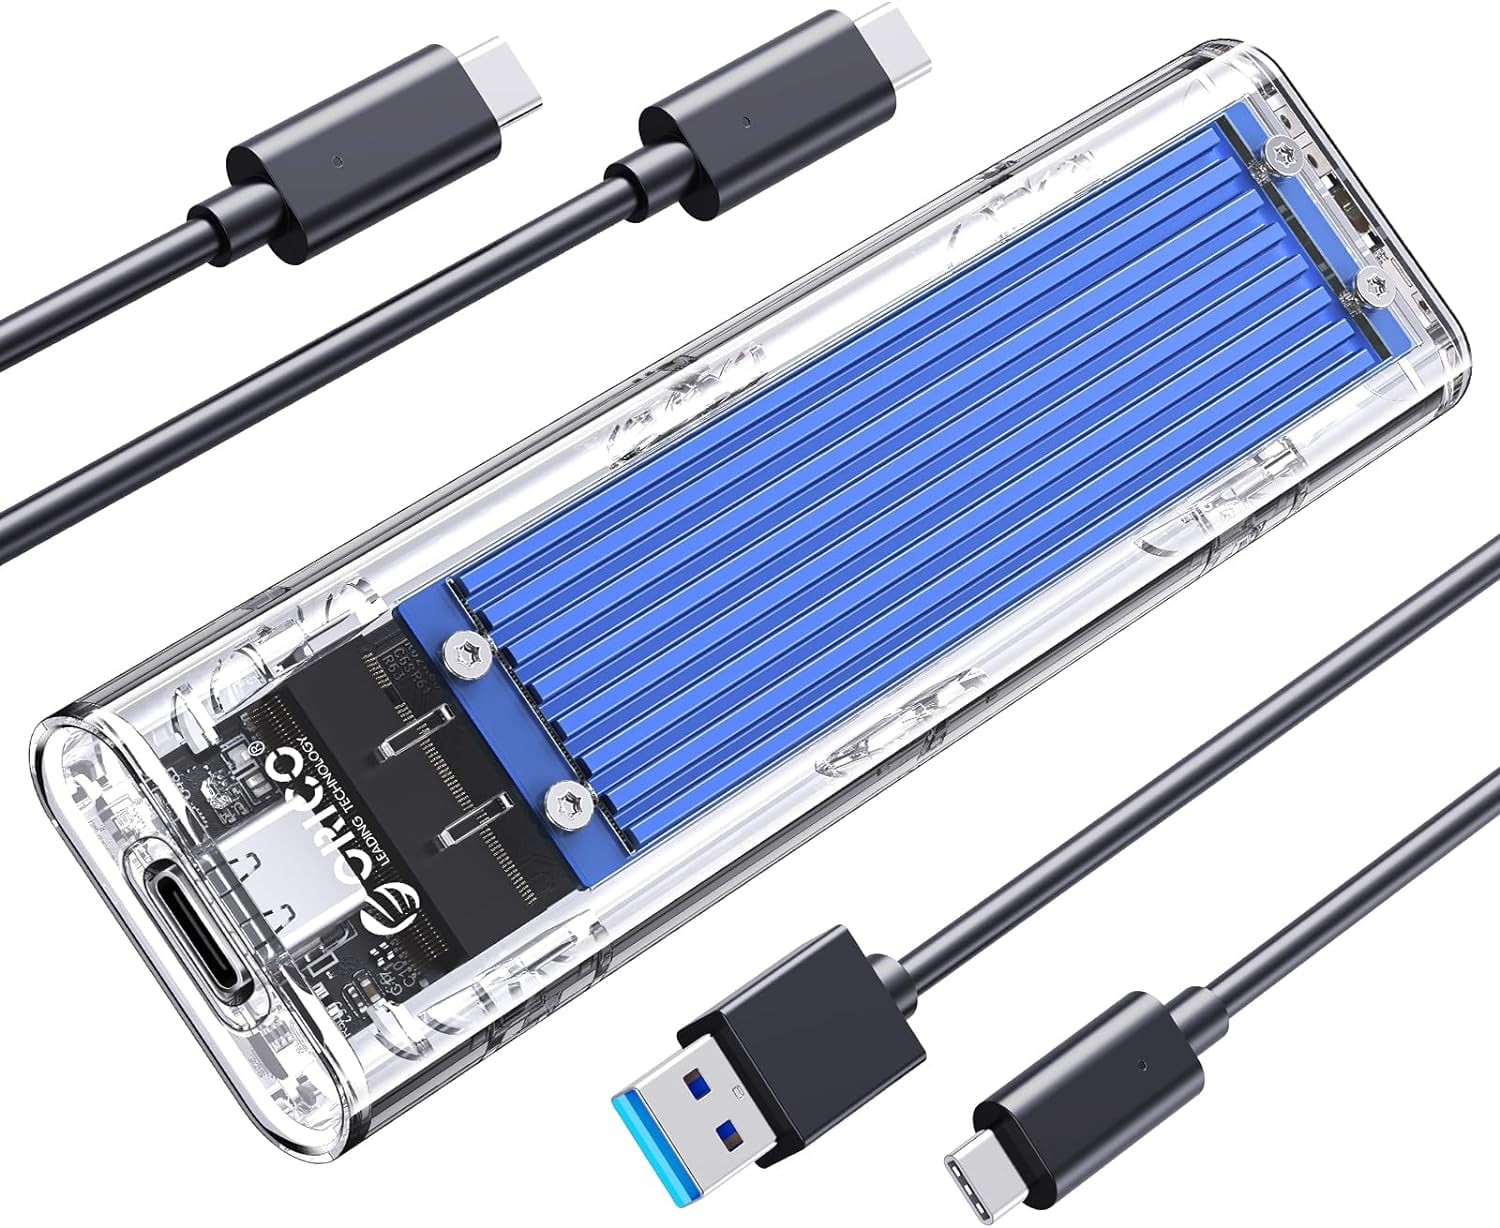 BOITIER SSD USB3.1 TO M.2 NVMe SSD ENCLOSURE AVEC USB TYPE-C